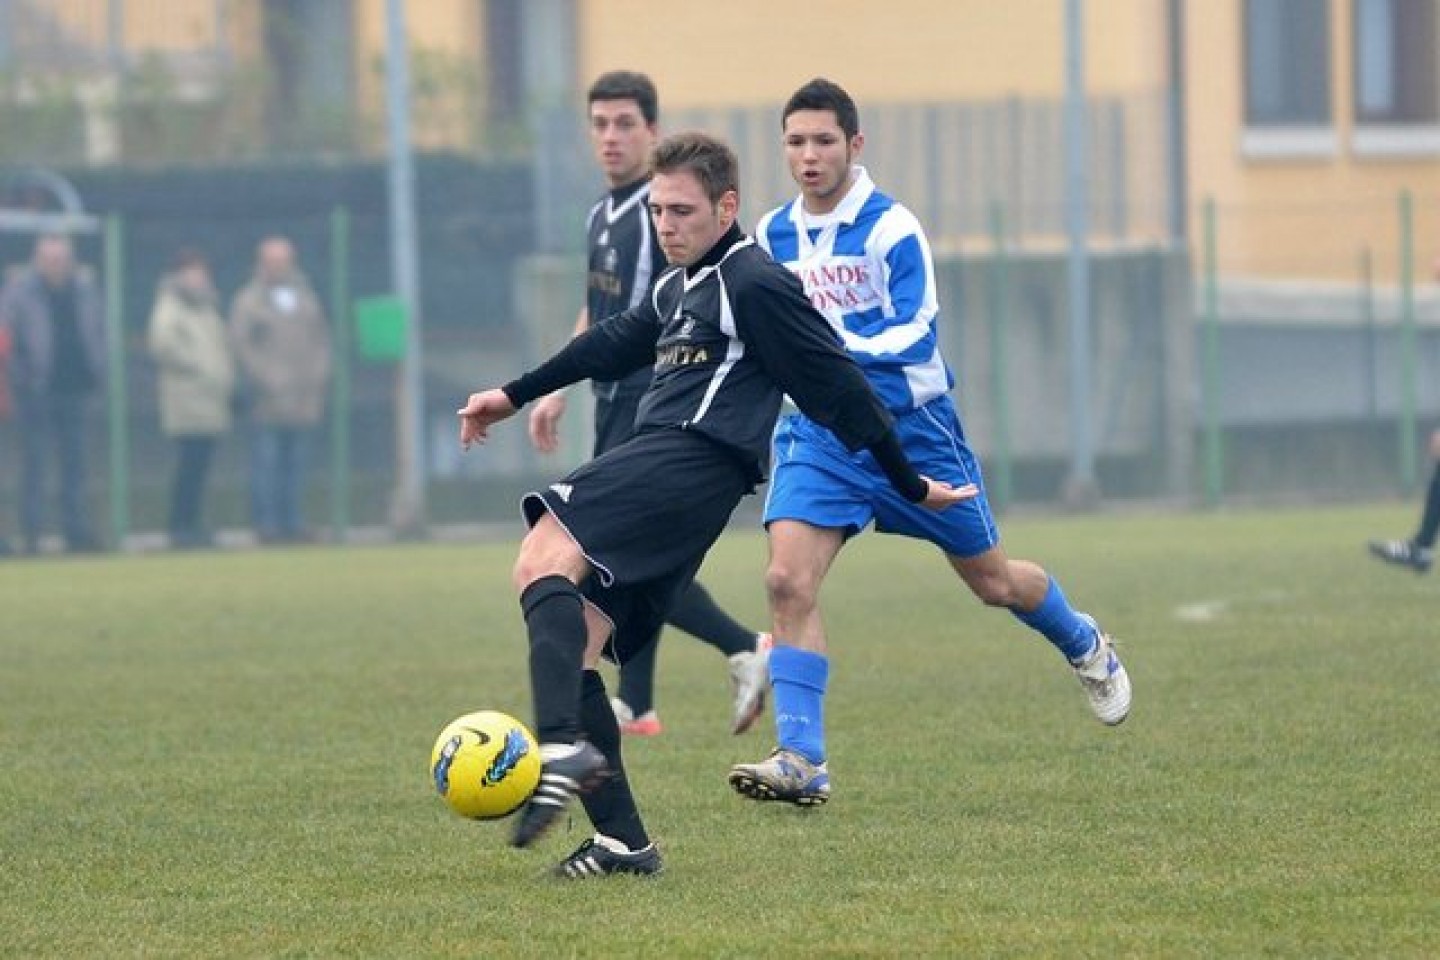 RIVINCITA/ Menini incanta Monteforte, già due goal per il mancino soavese